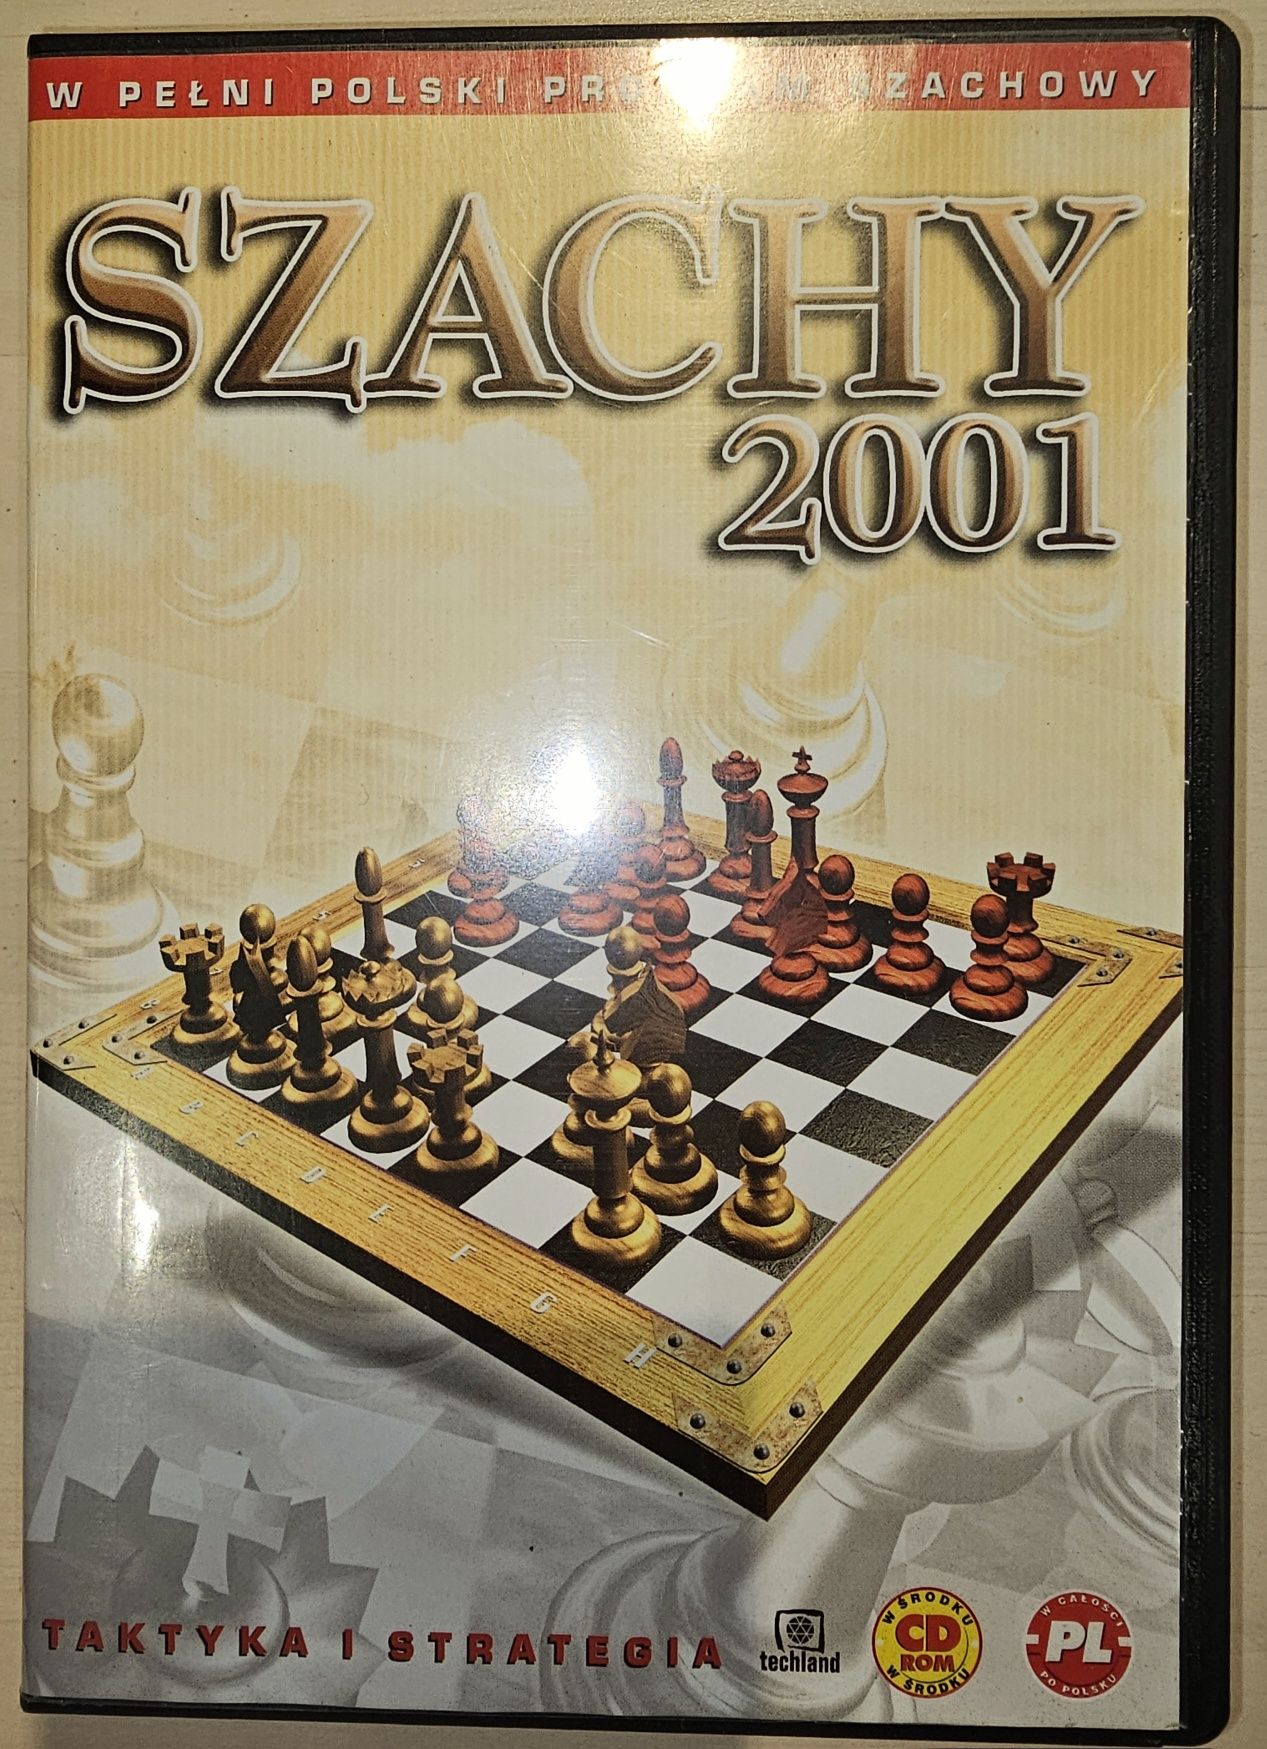 Szachy 2001 gra polski program szachowy klasyka